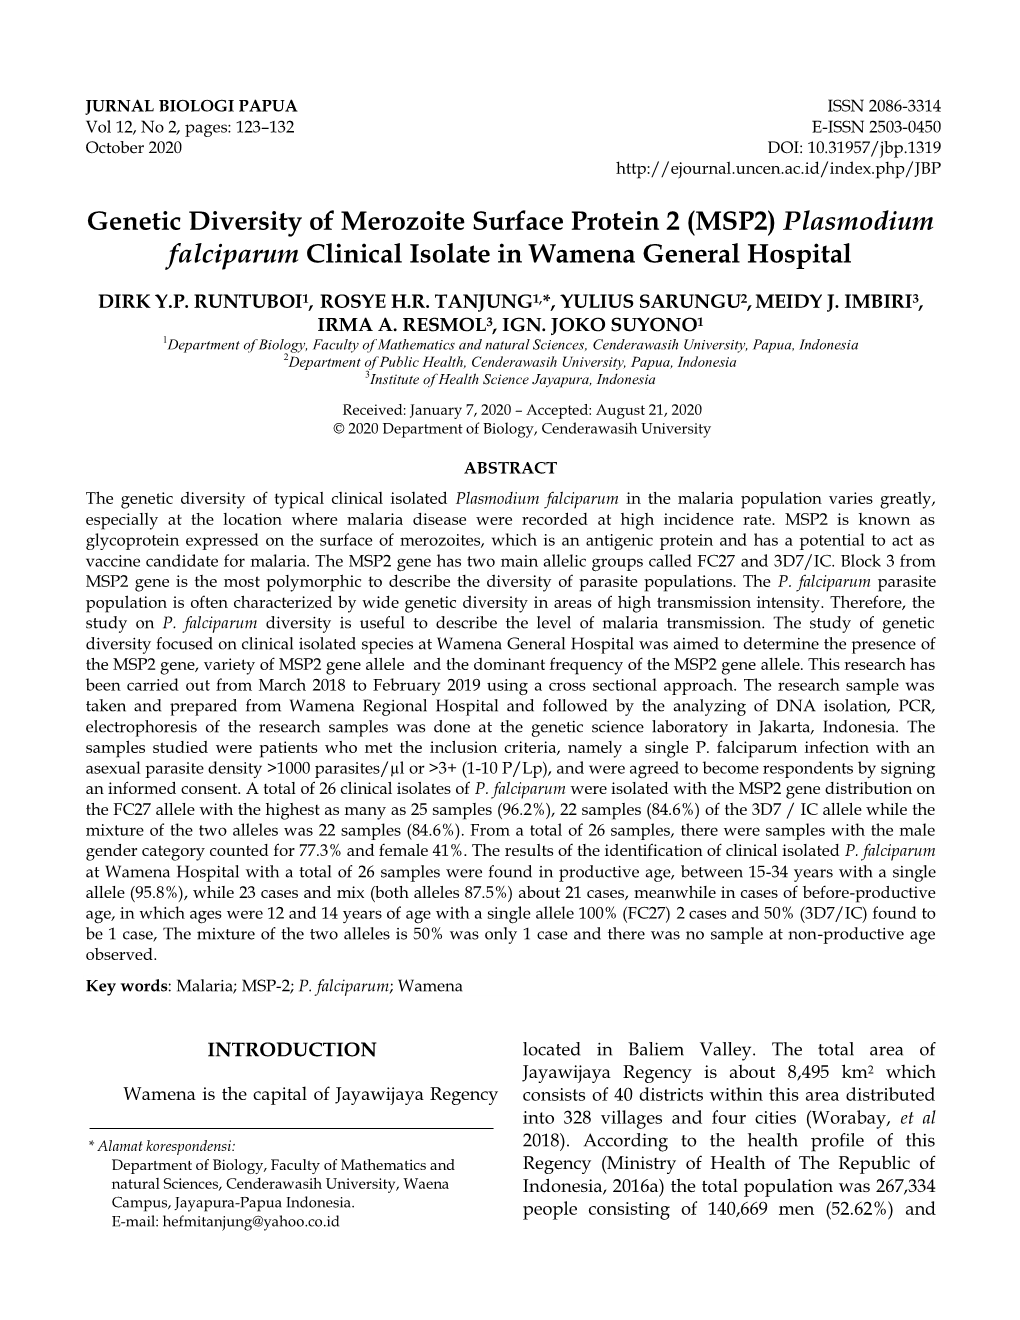 Genetic Diversity of Merozoite Surface Protein 2 (MSP2) Plasmodium Falciparum Clinical Isolate in Wamena General Hospital